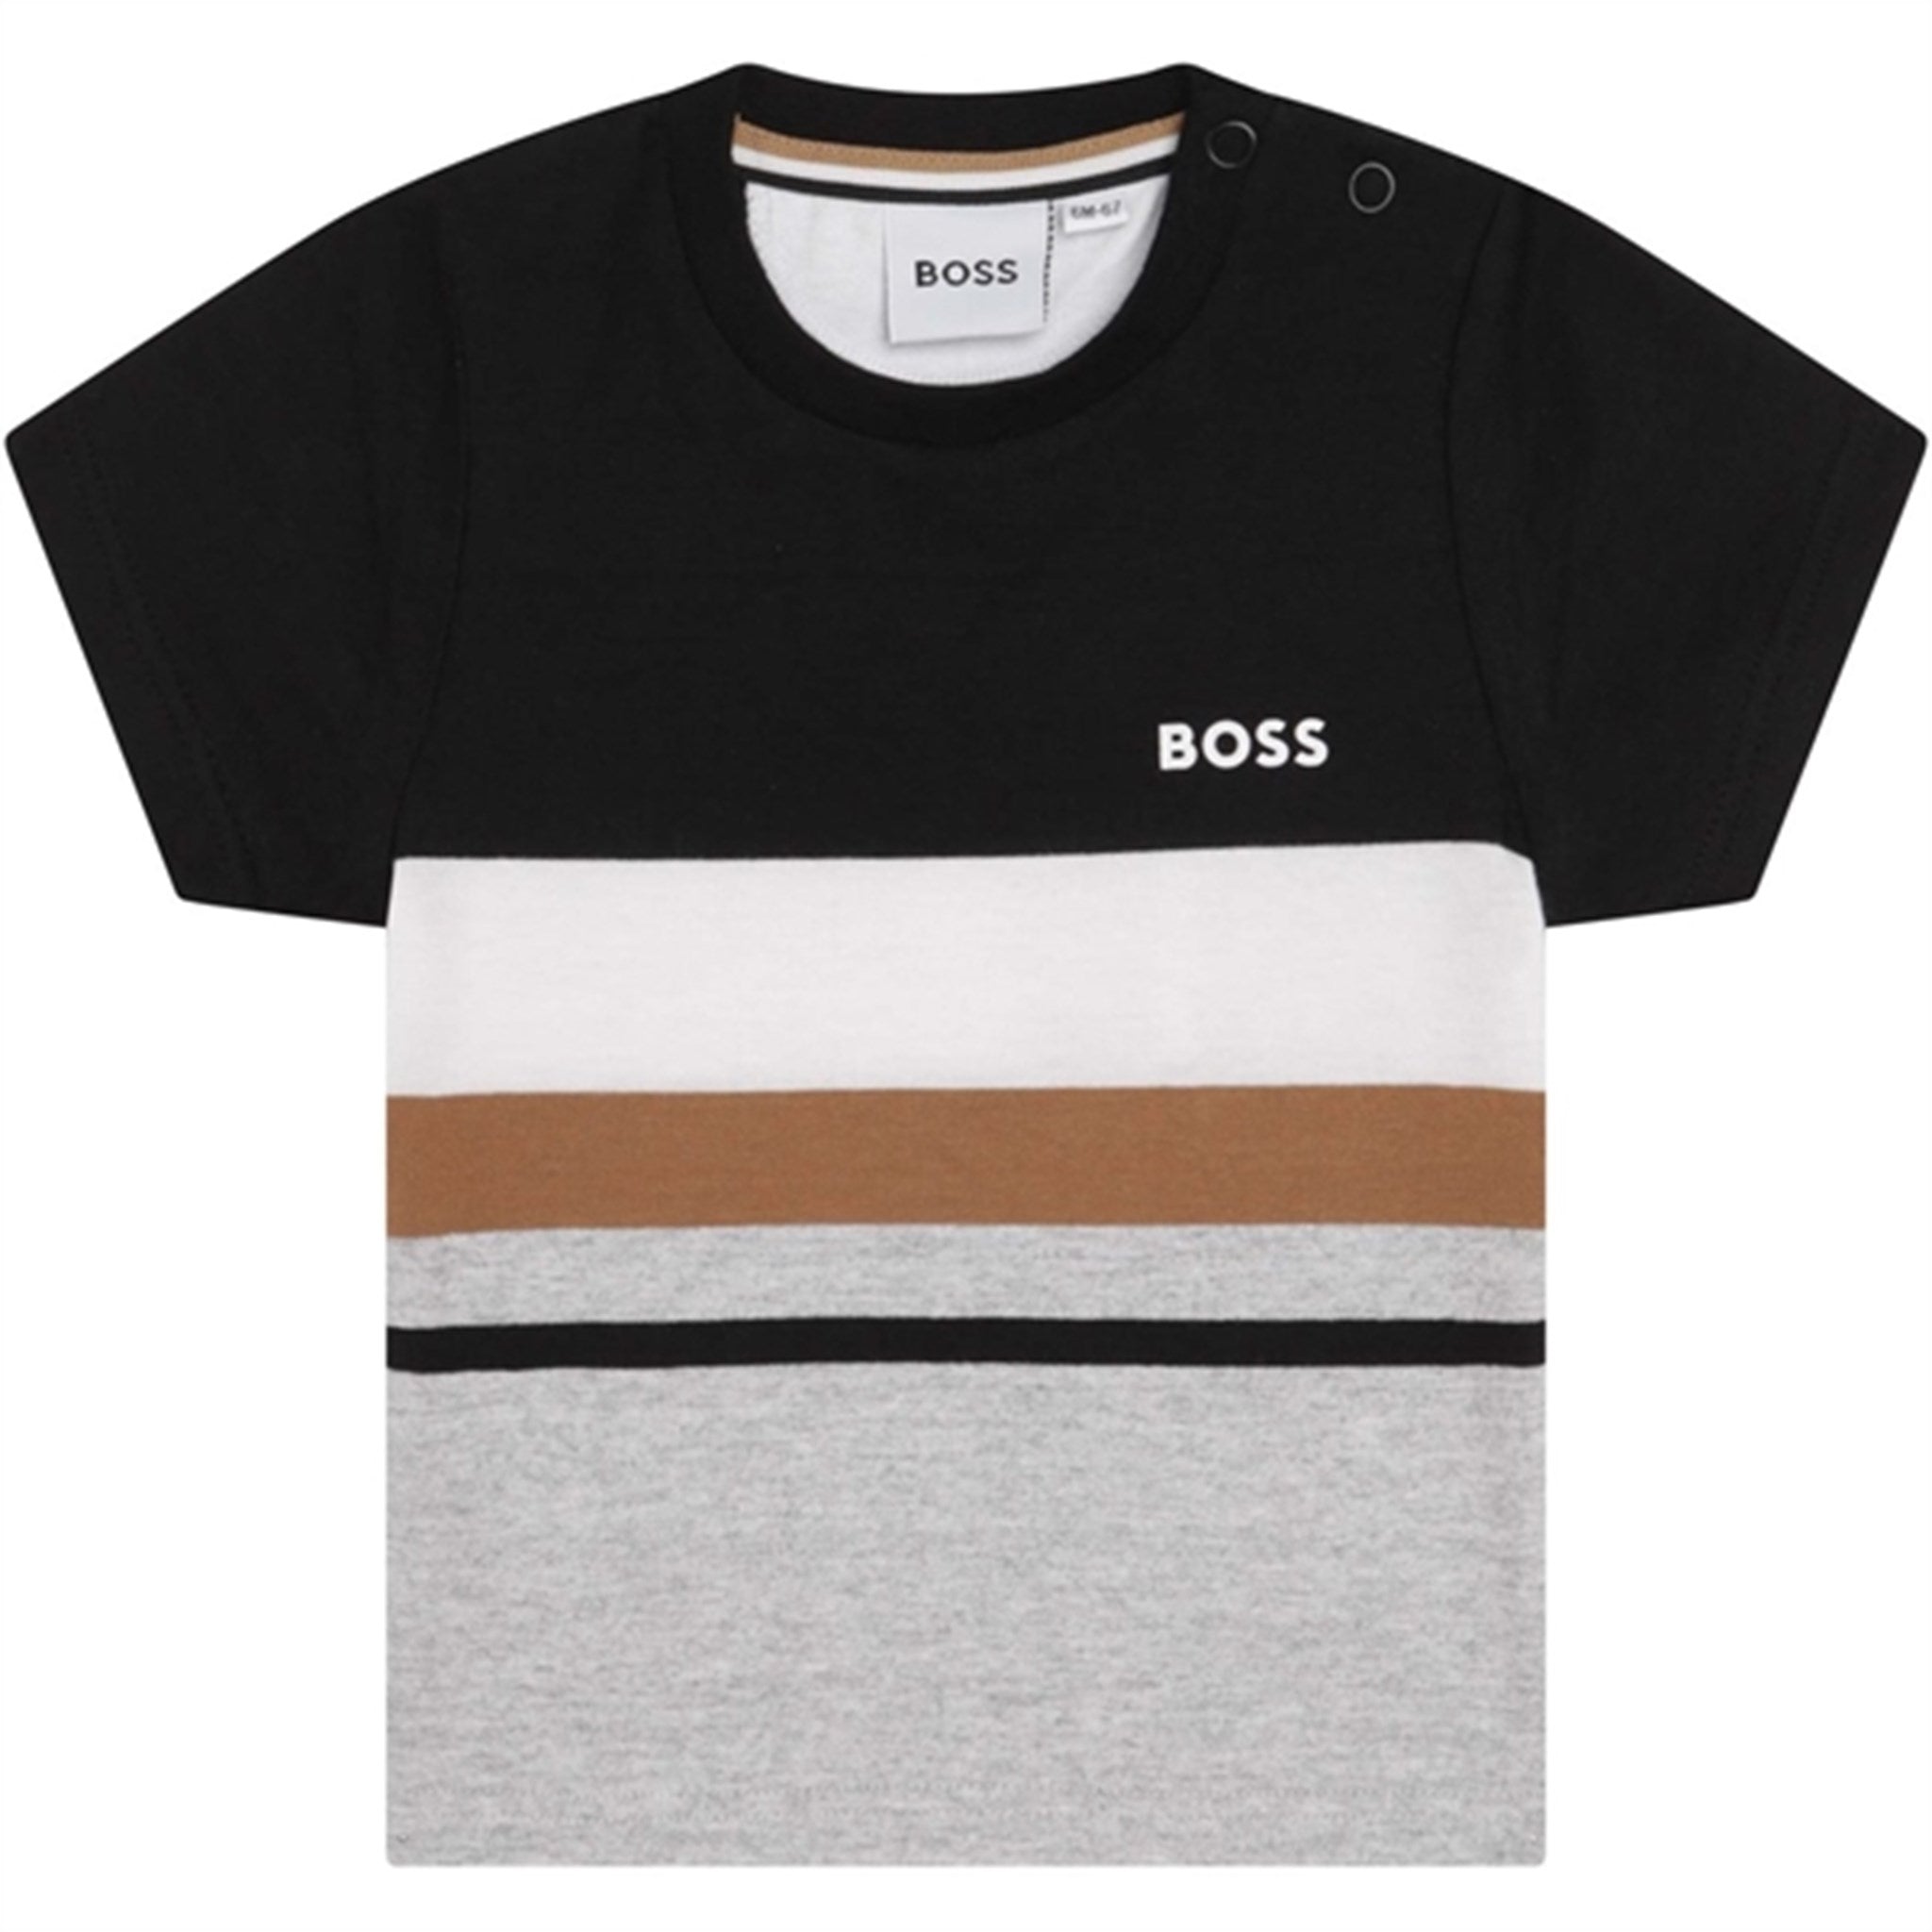 Hugo Boss Bebis T-shirt Black